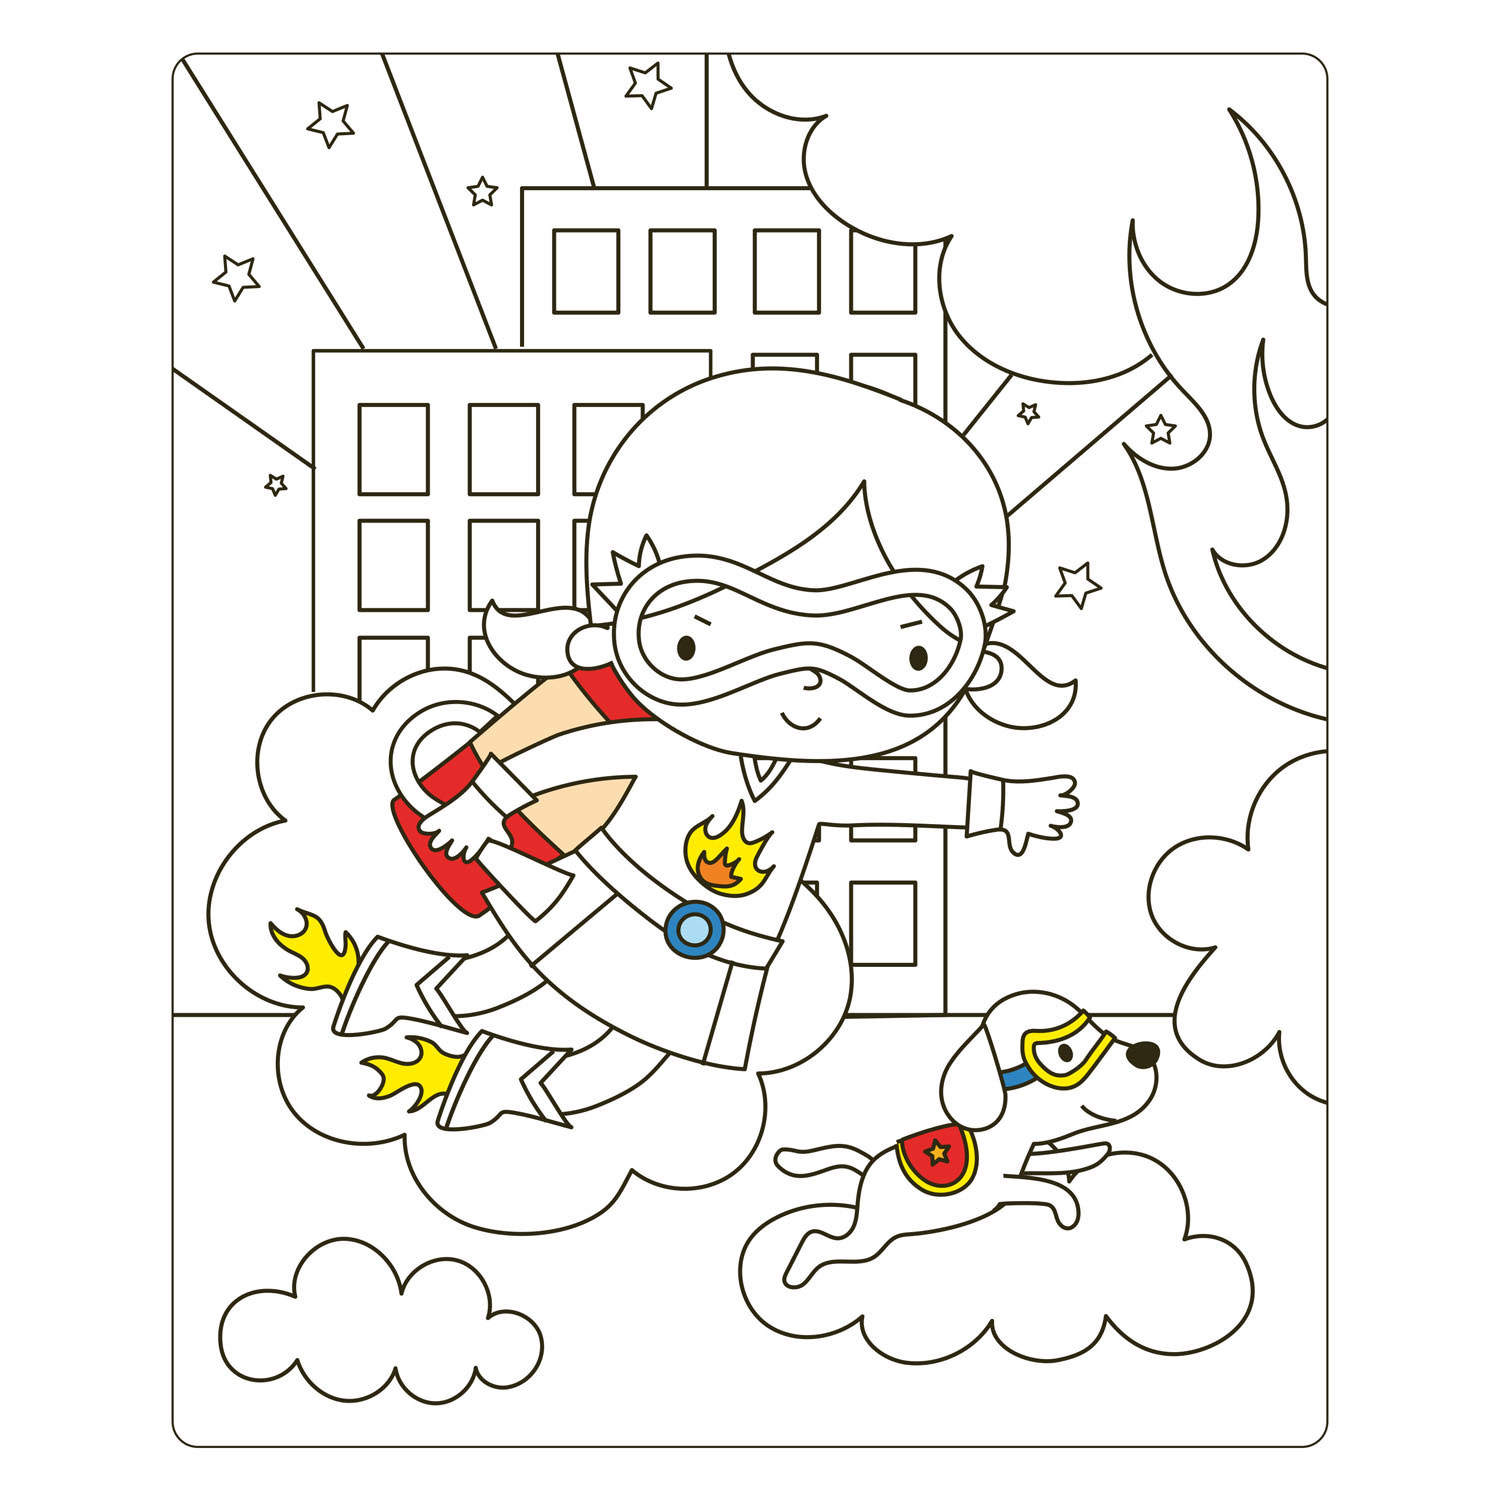 Super Girls Sticker Fun - Aankleedpoppen Stickerboek